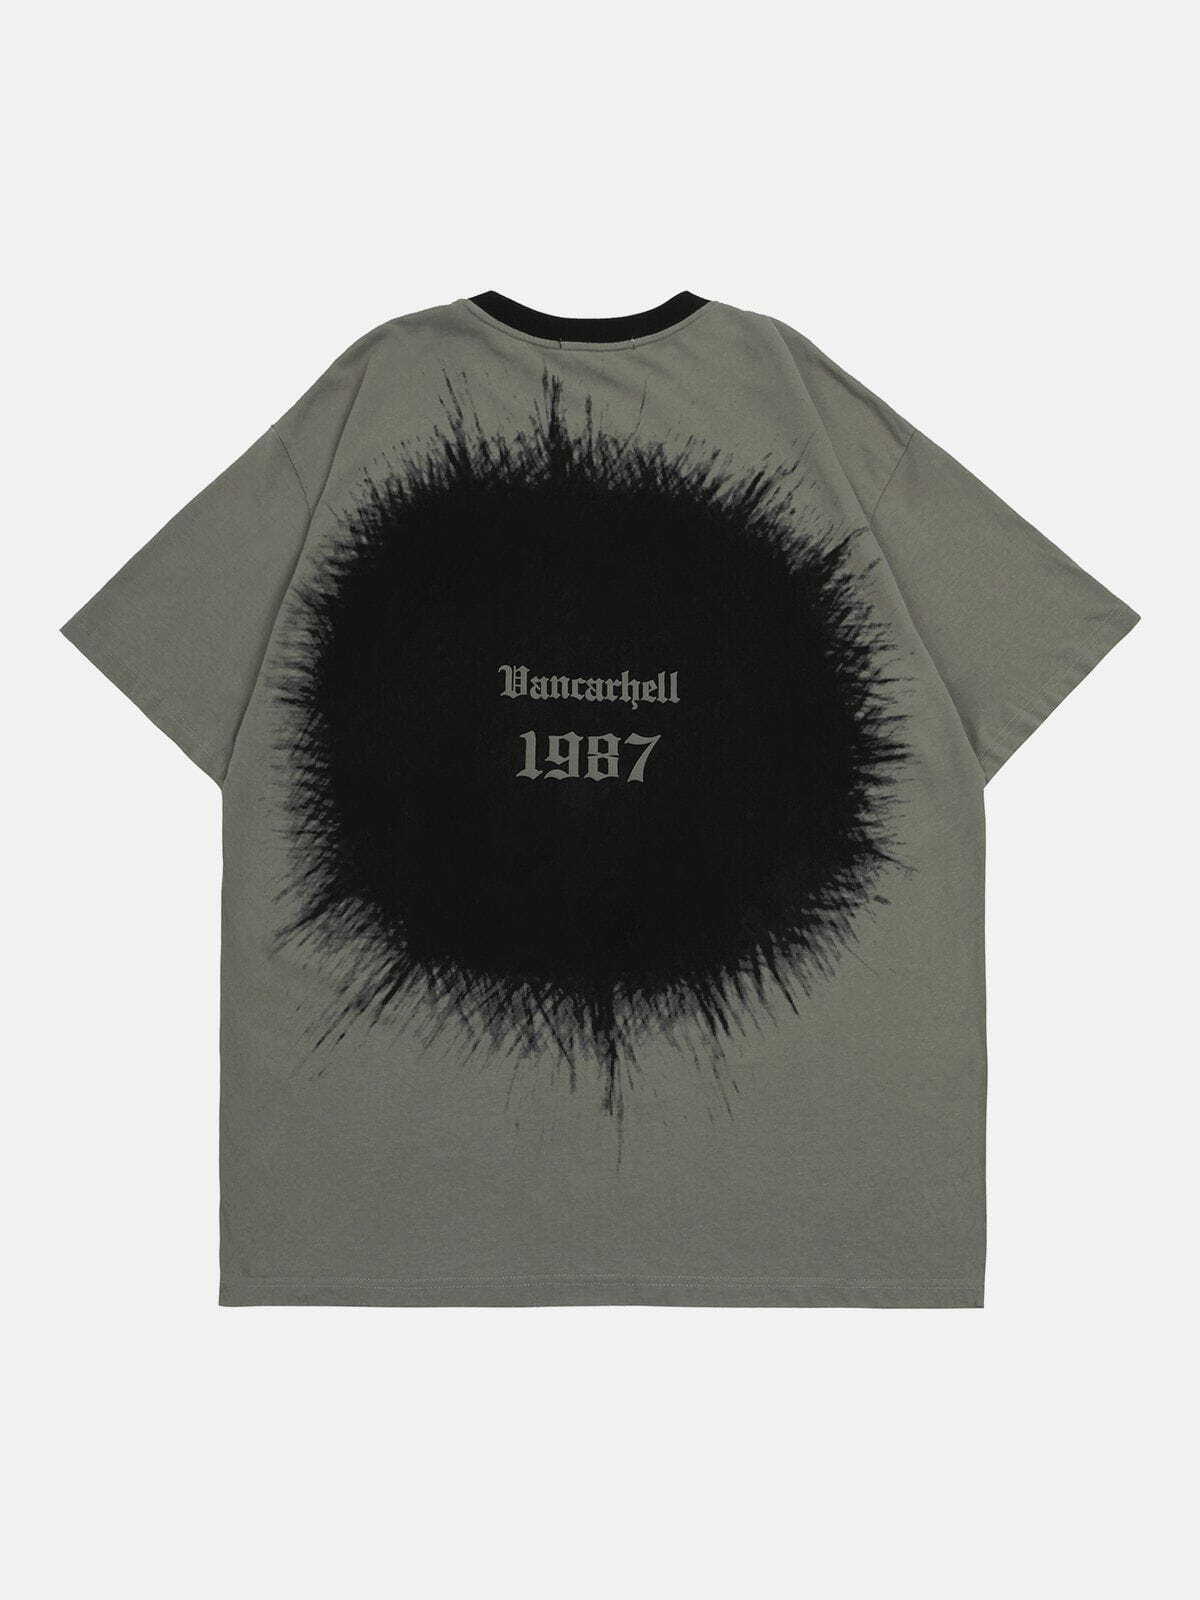 youthful retro print tee edgy  vibrant streetwear shirt 3530